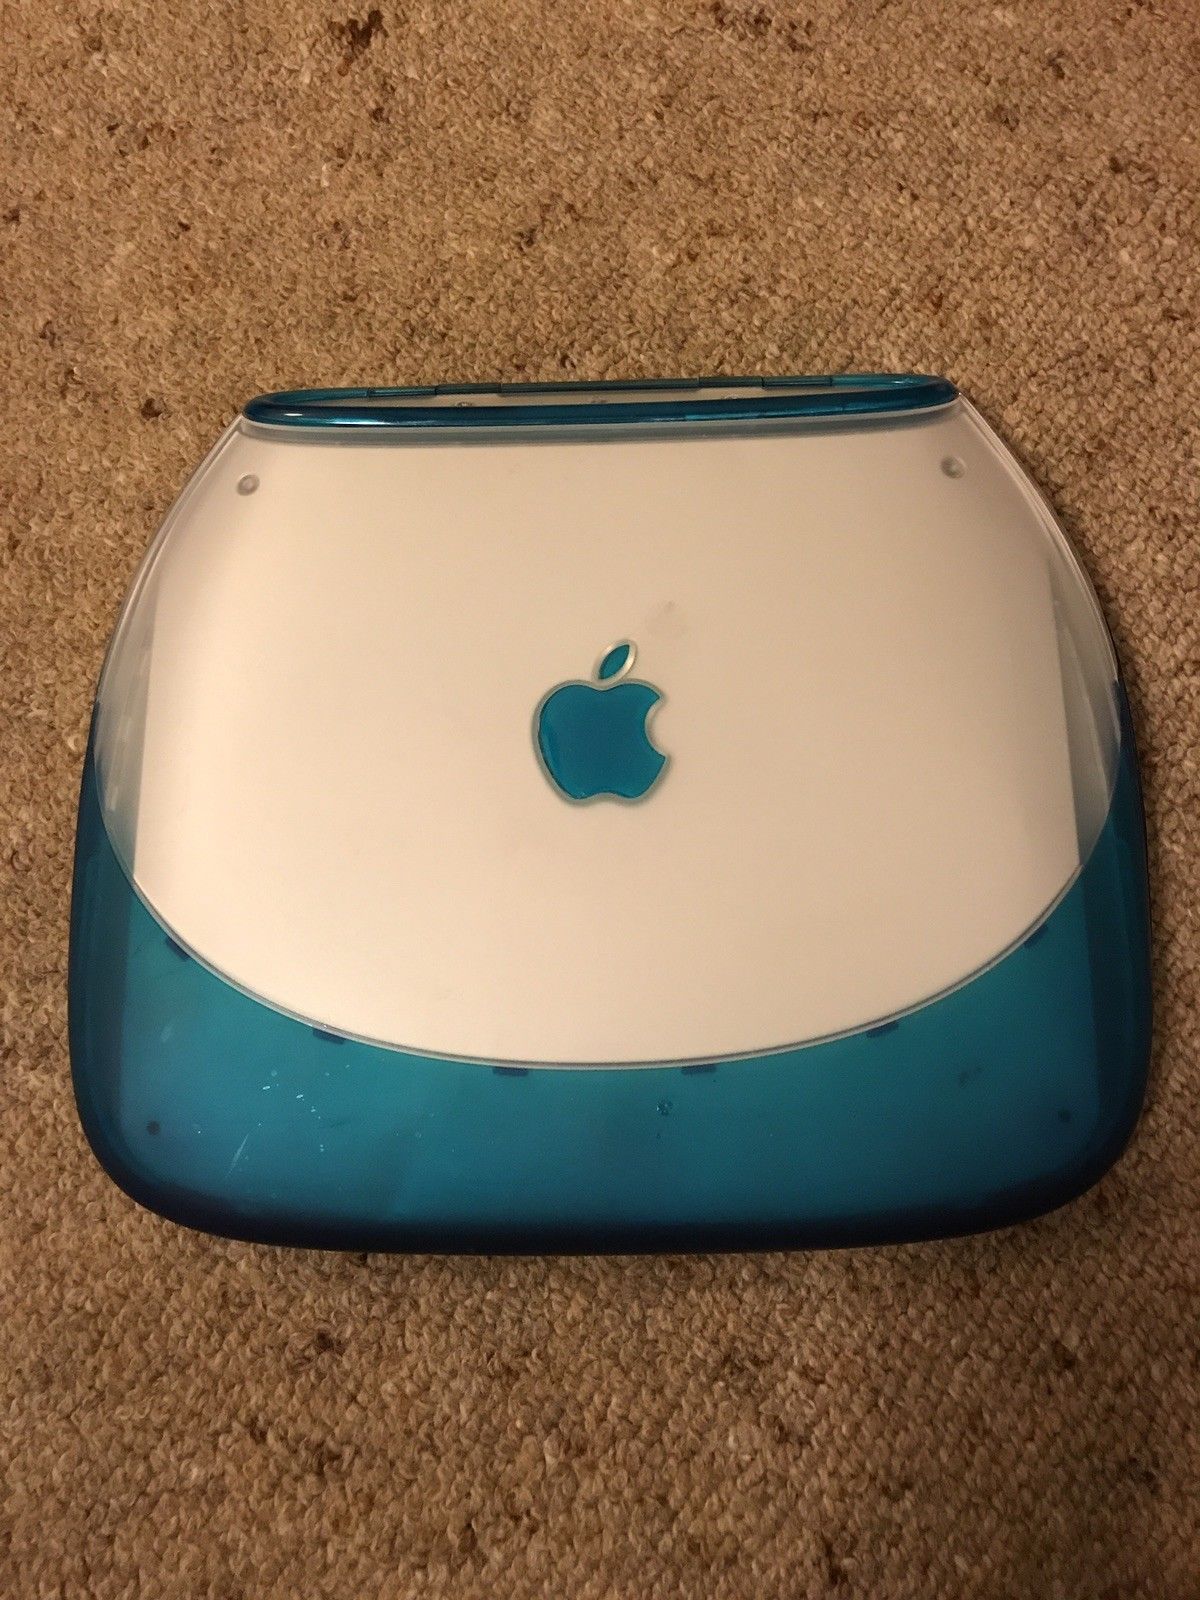 apple-ibook-clamshell-laptop-in-teal-working-retro-computer.jpg